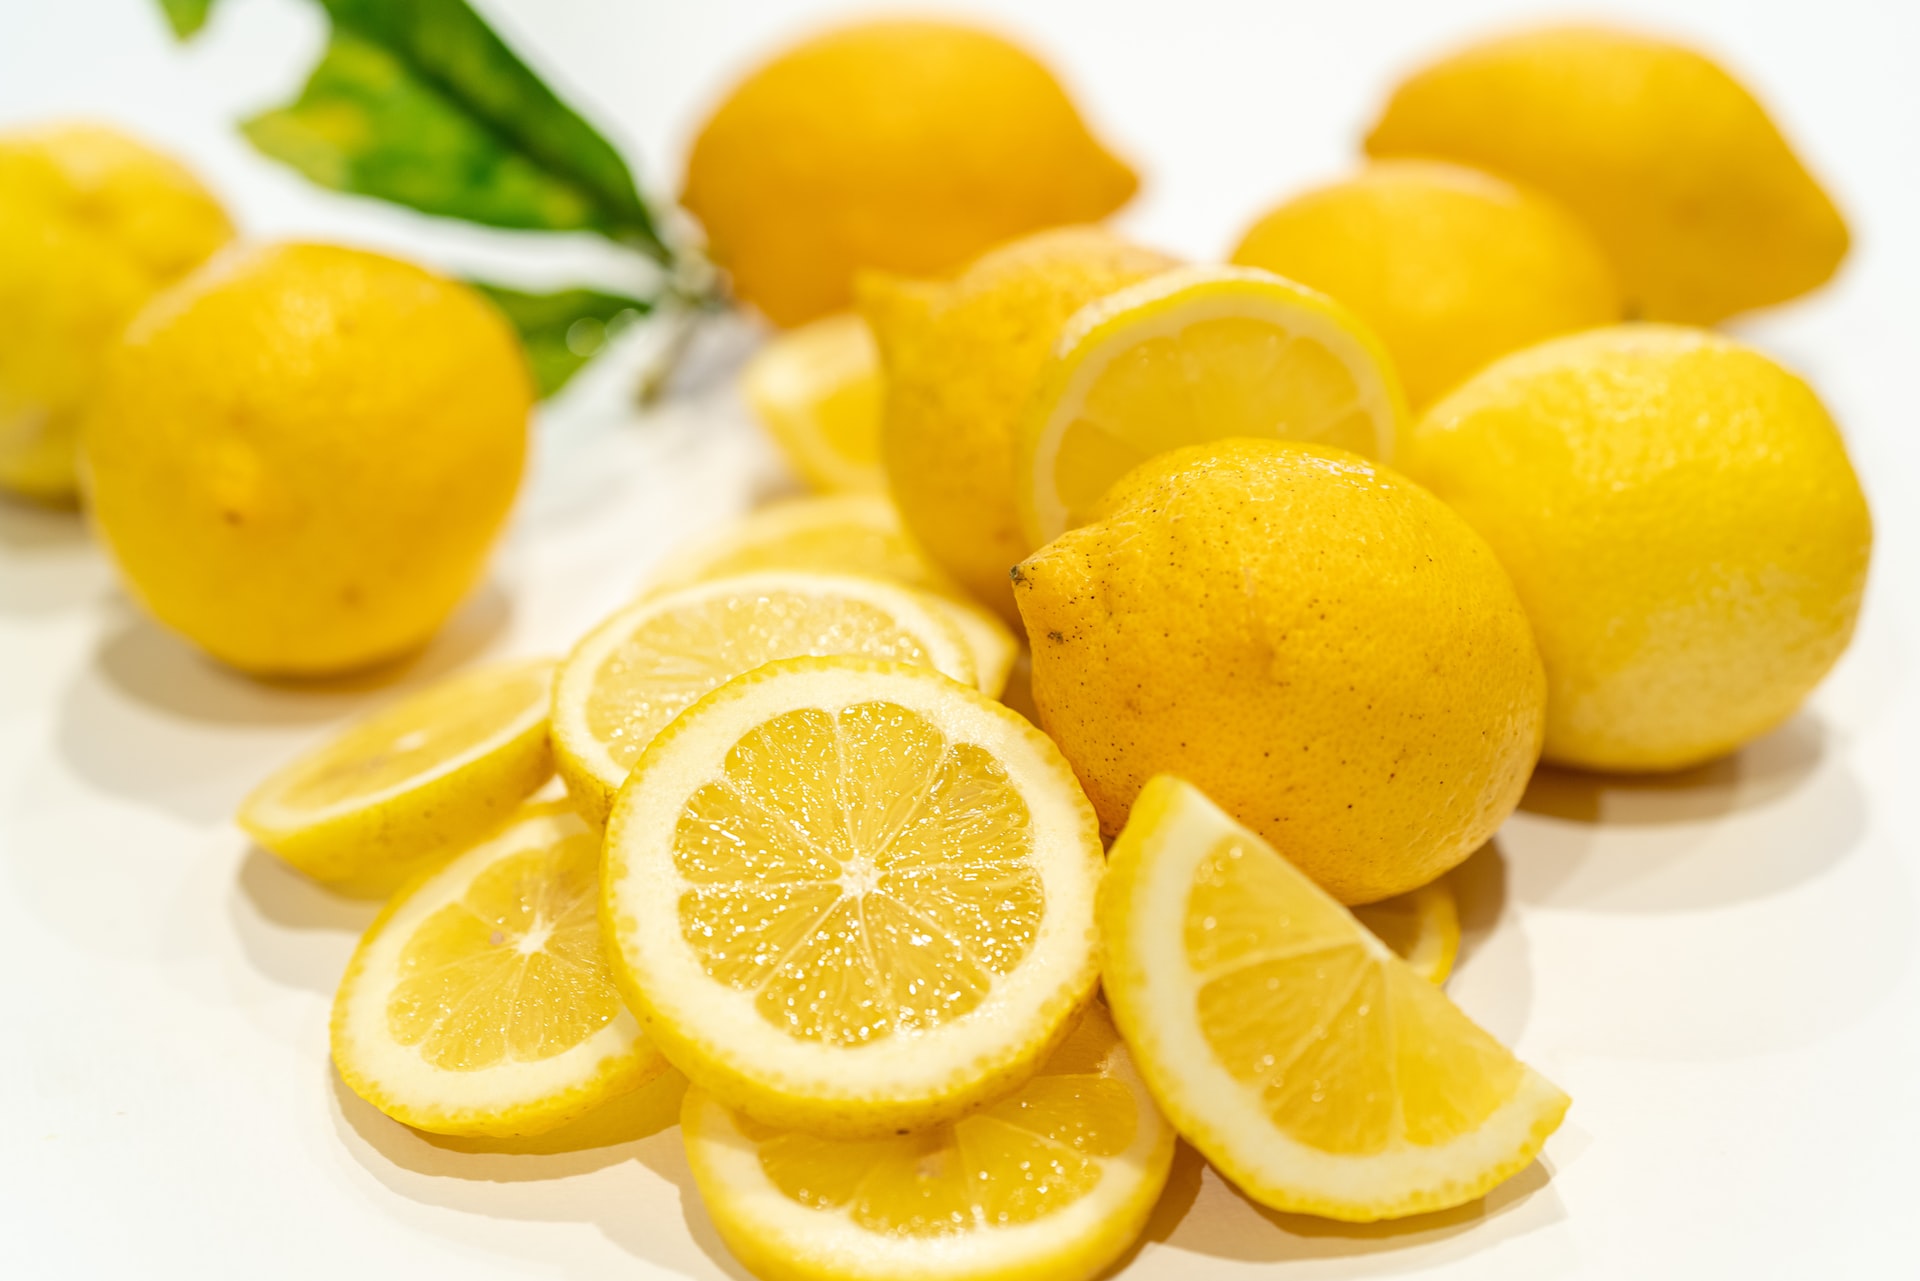 Lemon: The Citrus Superfruit with Surprising Health Benefits